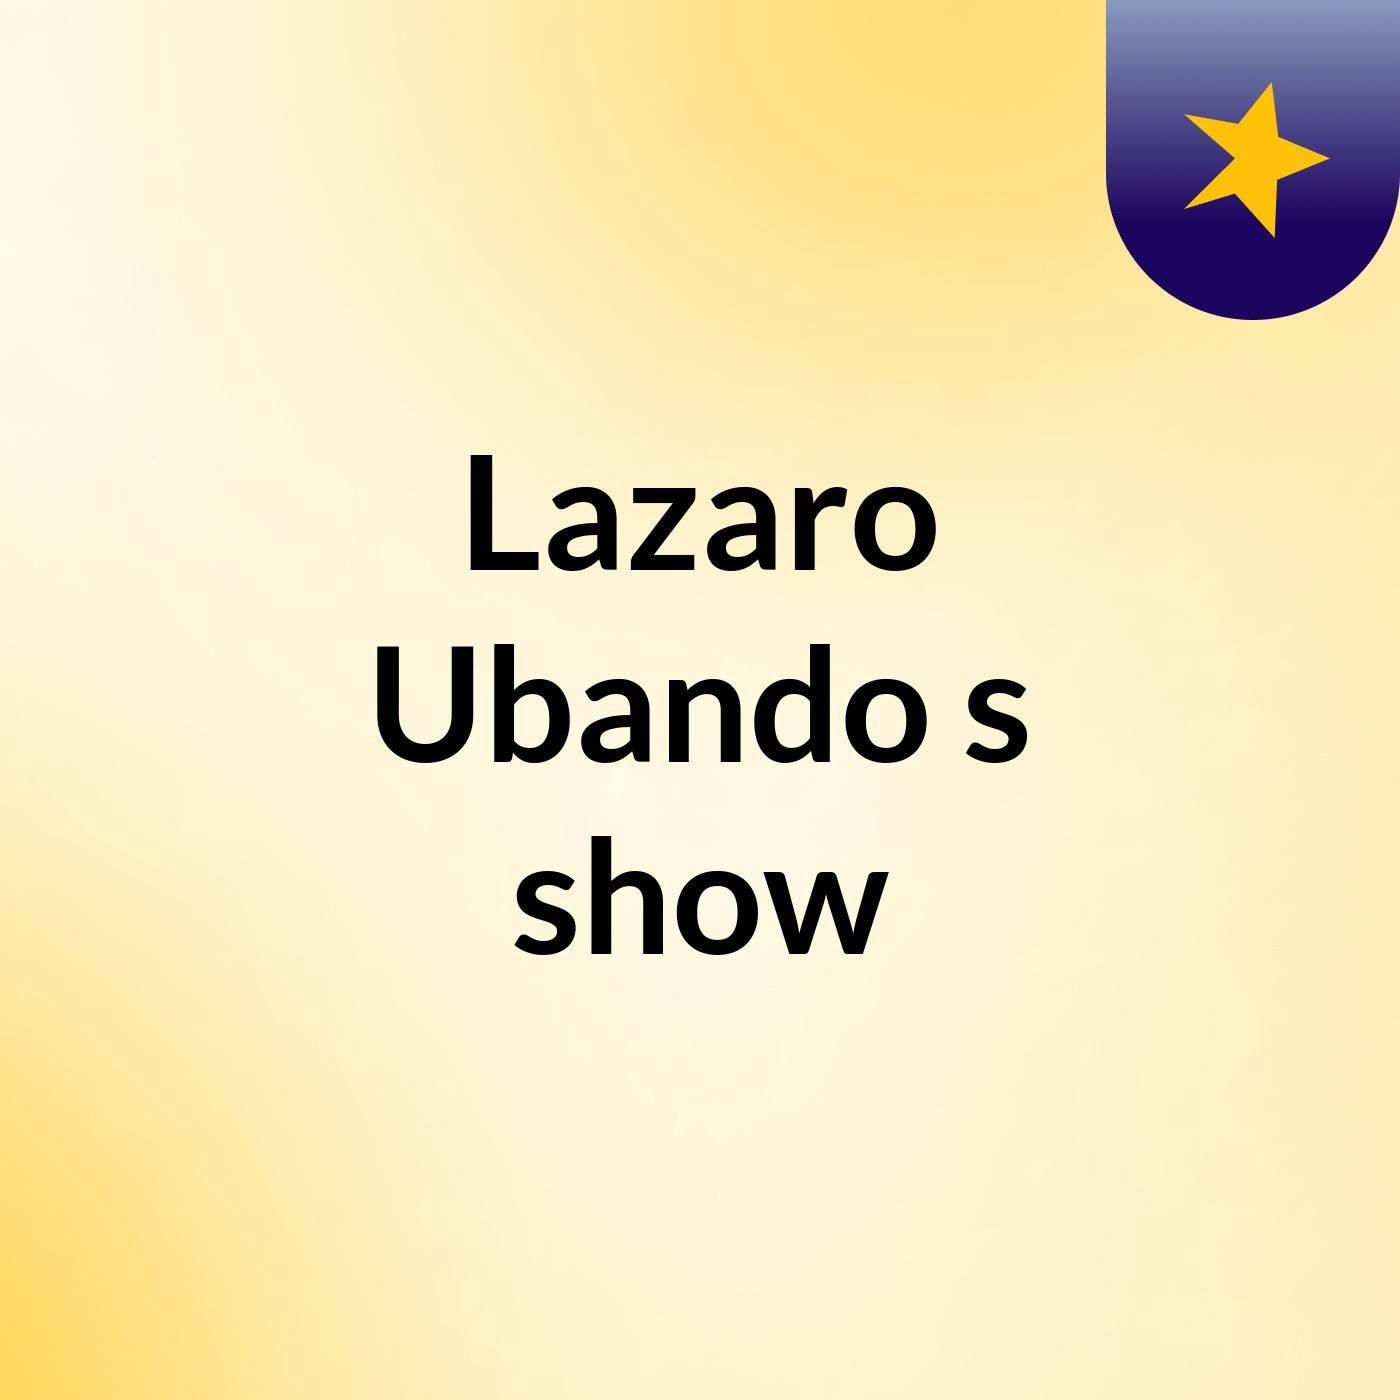 Lazaro Ubando's show